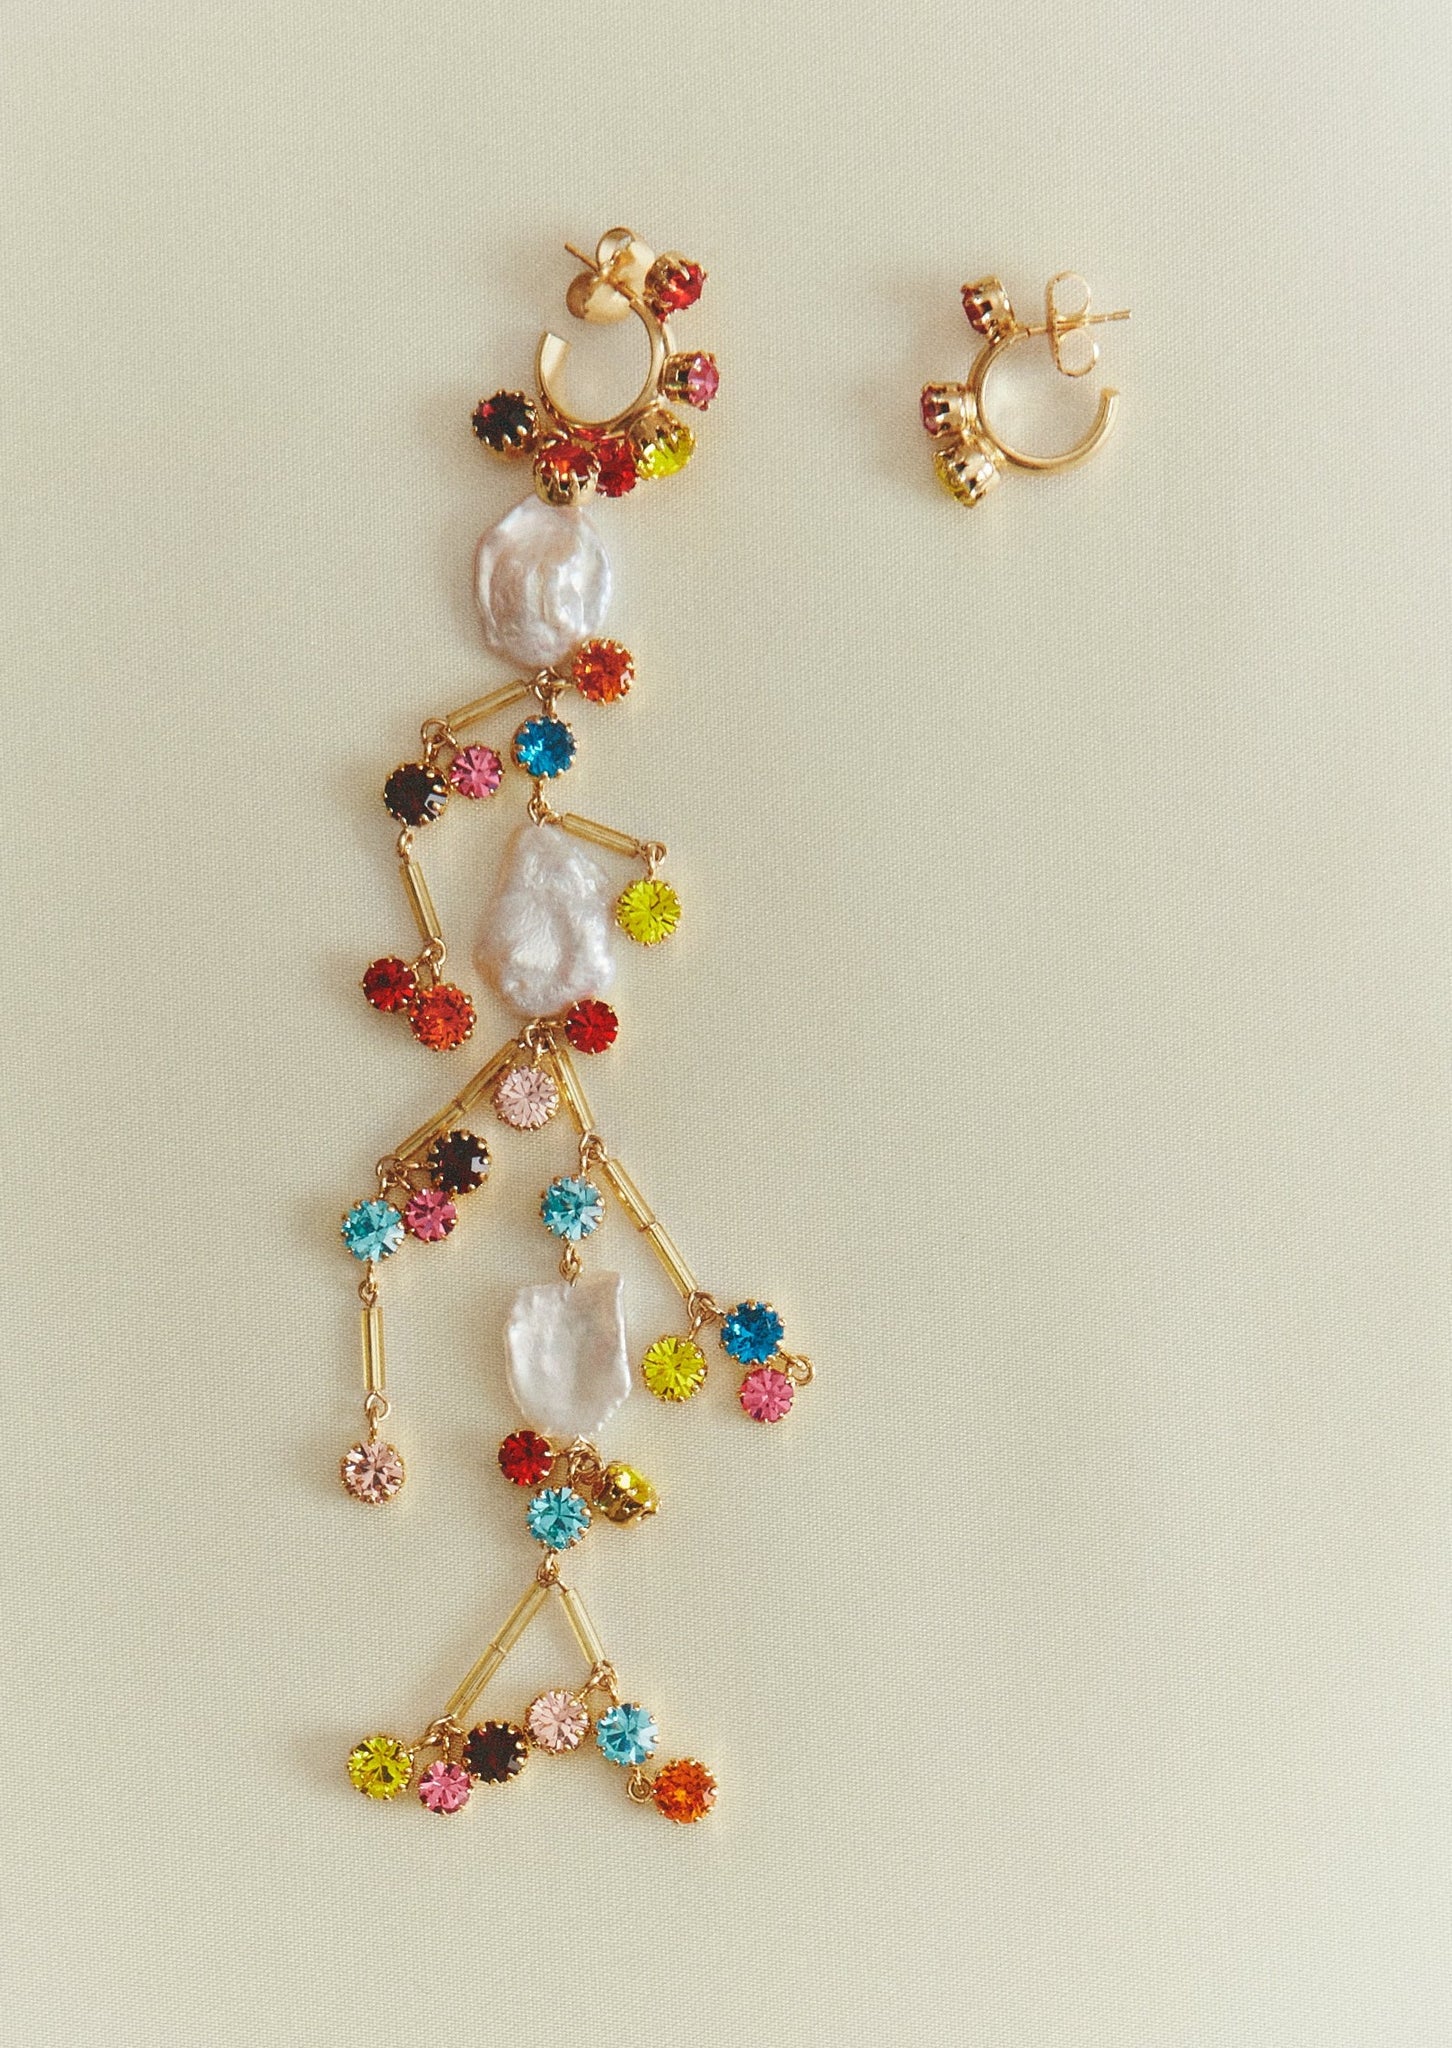 Stromboli earrings